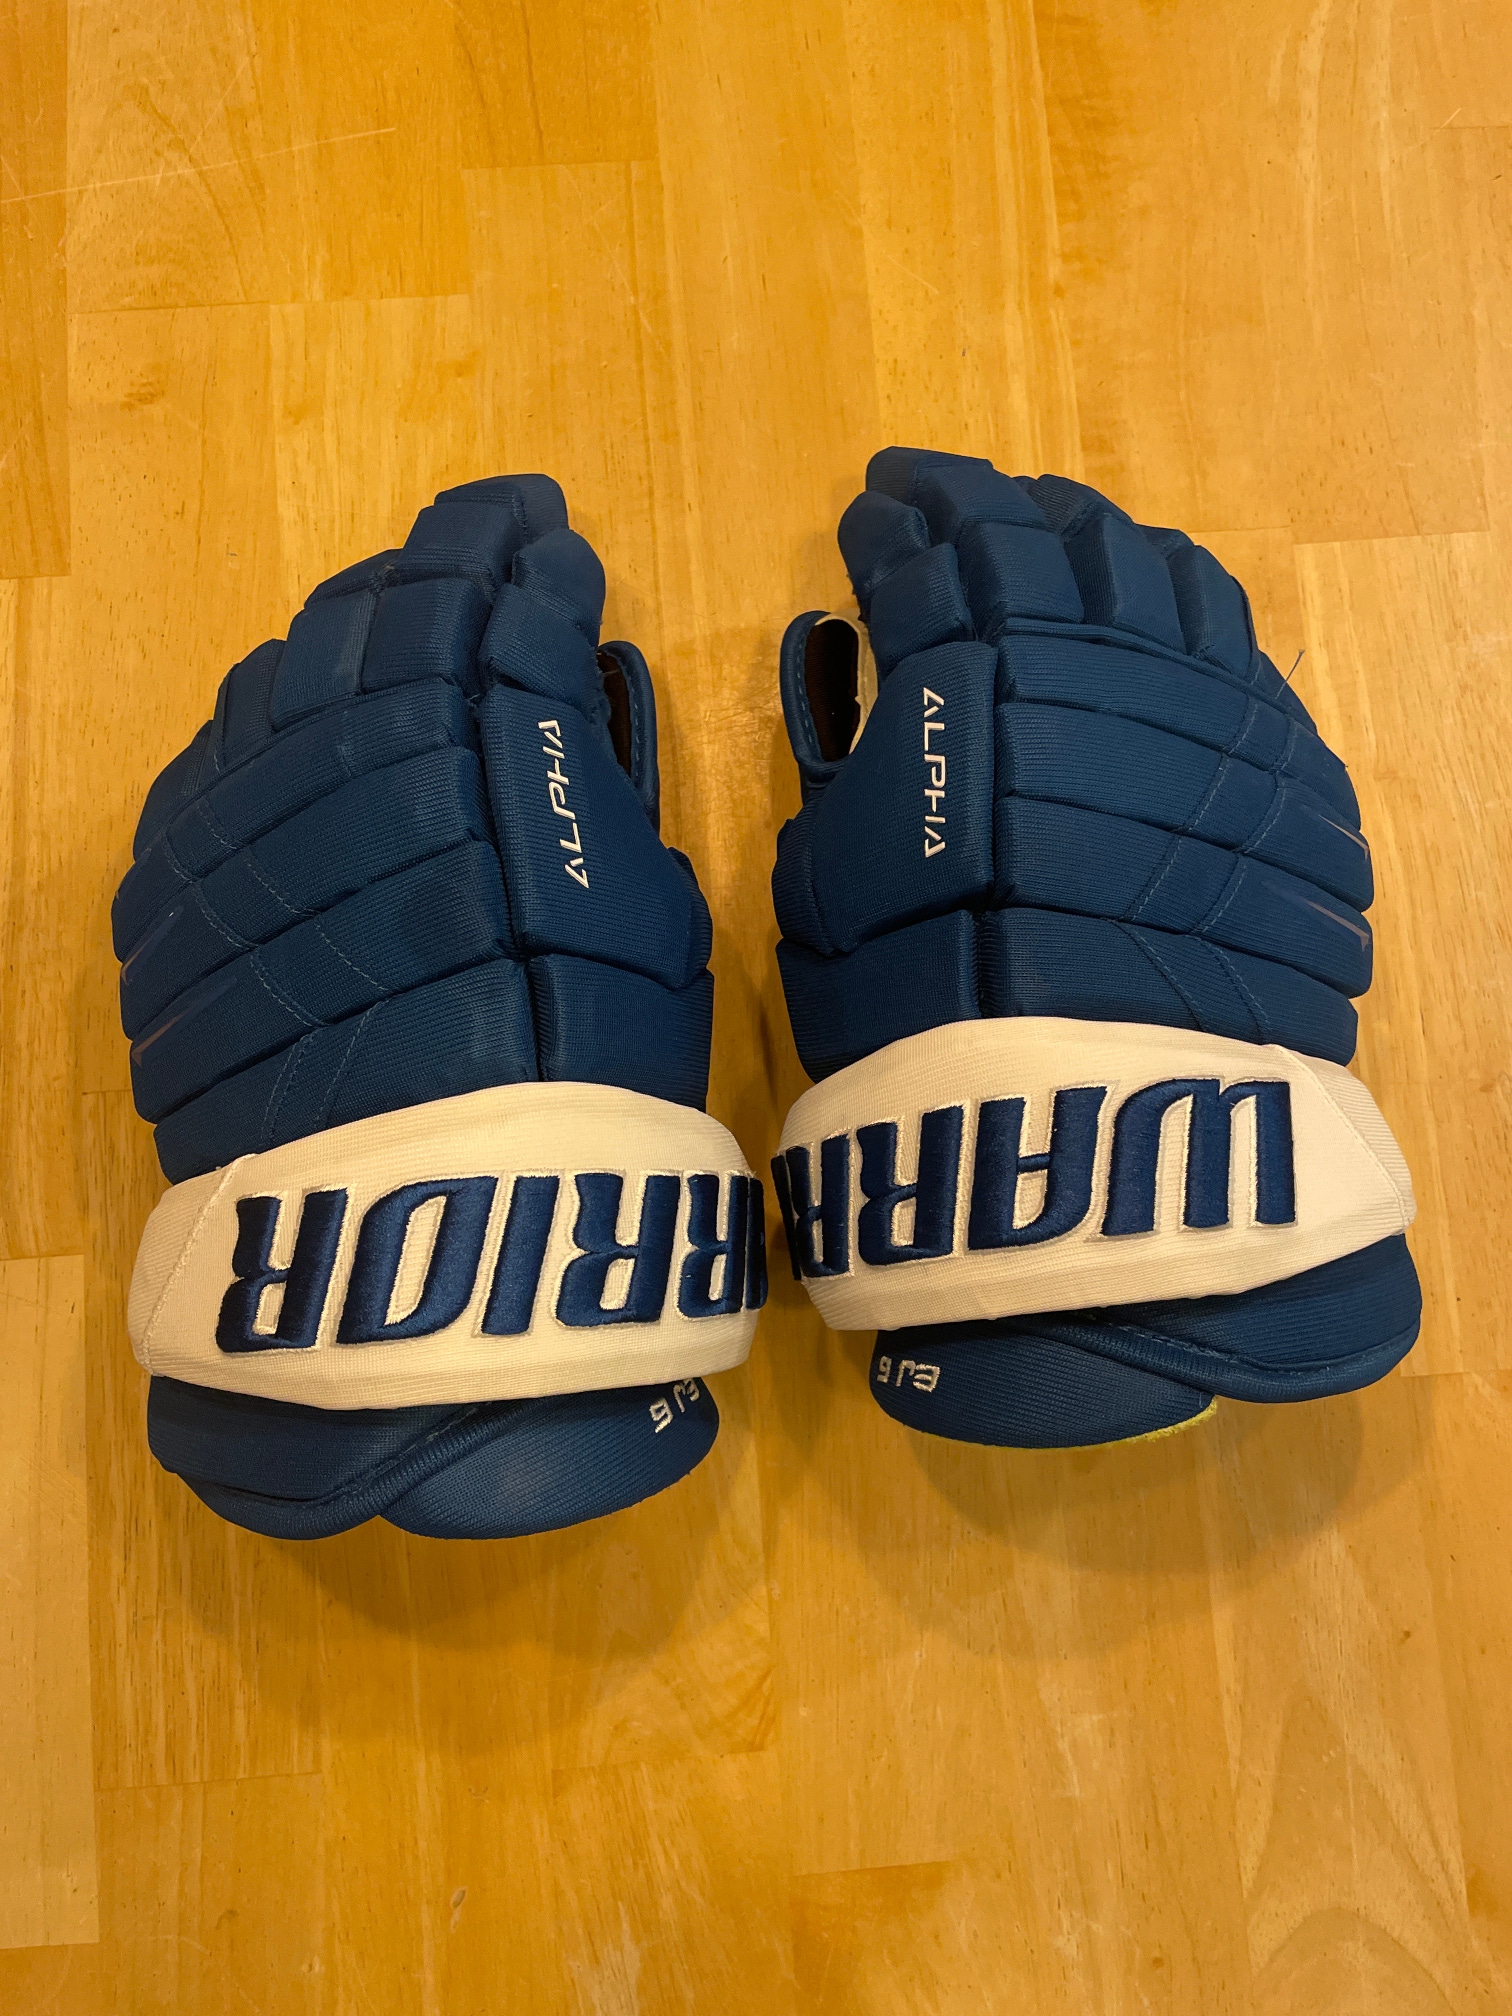 Used Warrior Alpha DX Pro Gloves 14" Pro Stock